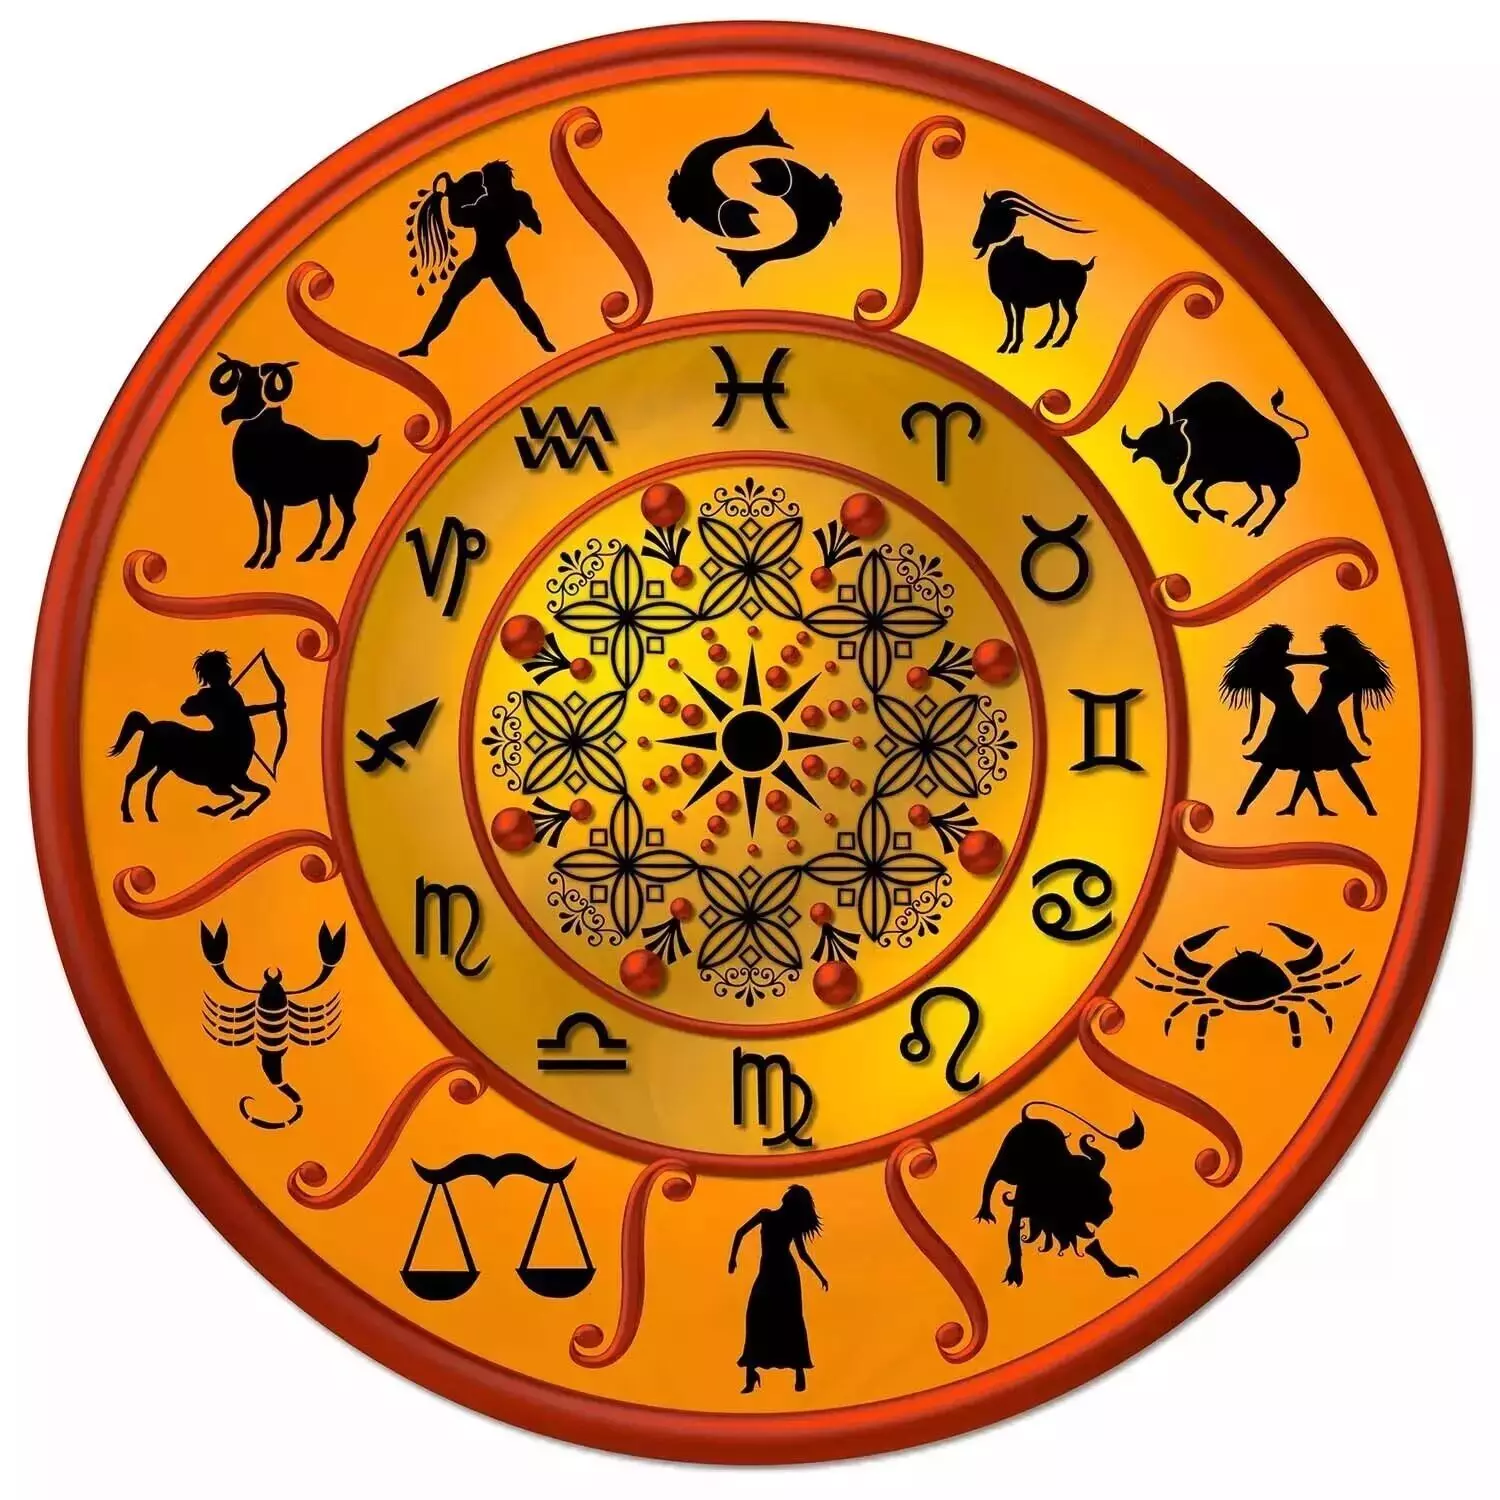 19 November – Know your todays horoscope